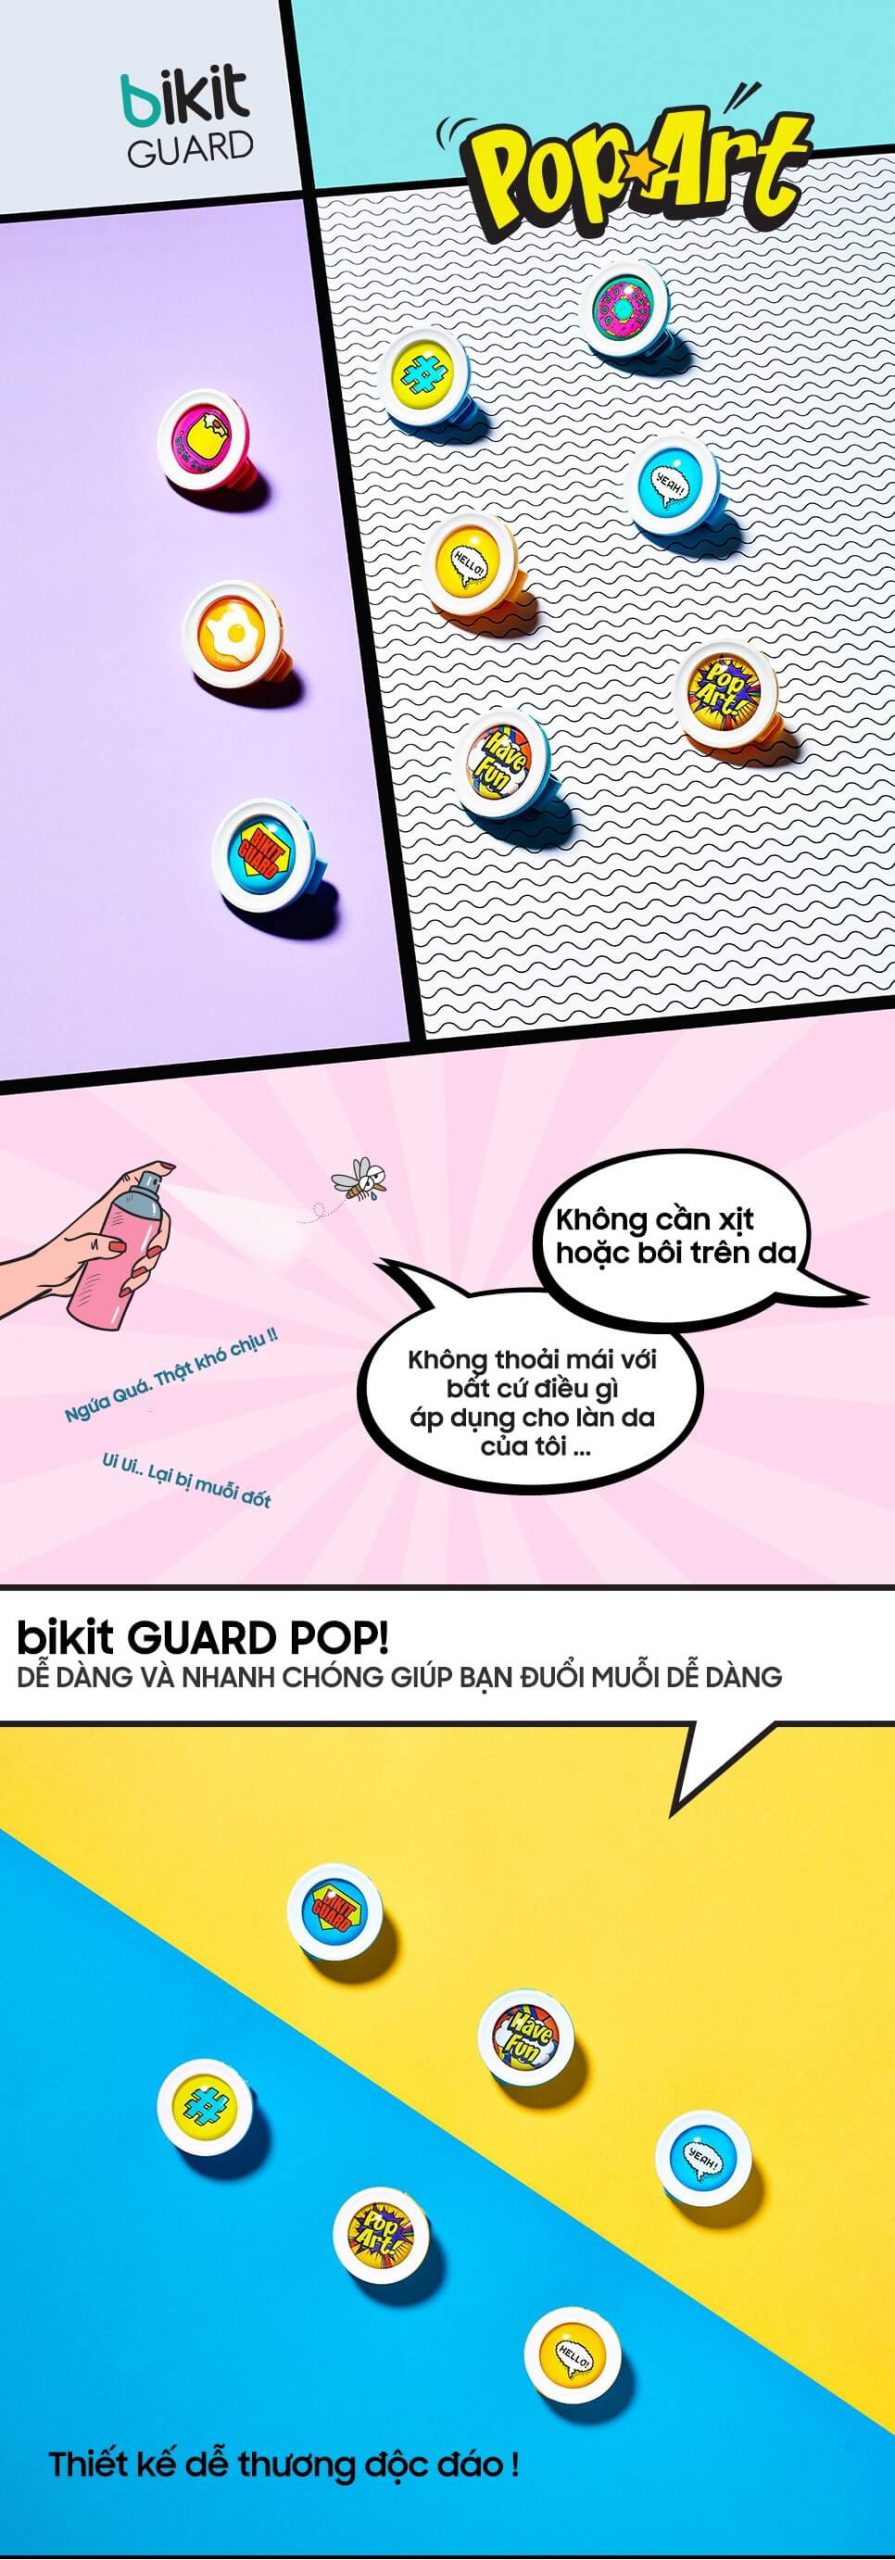 Bikit Guard POP